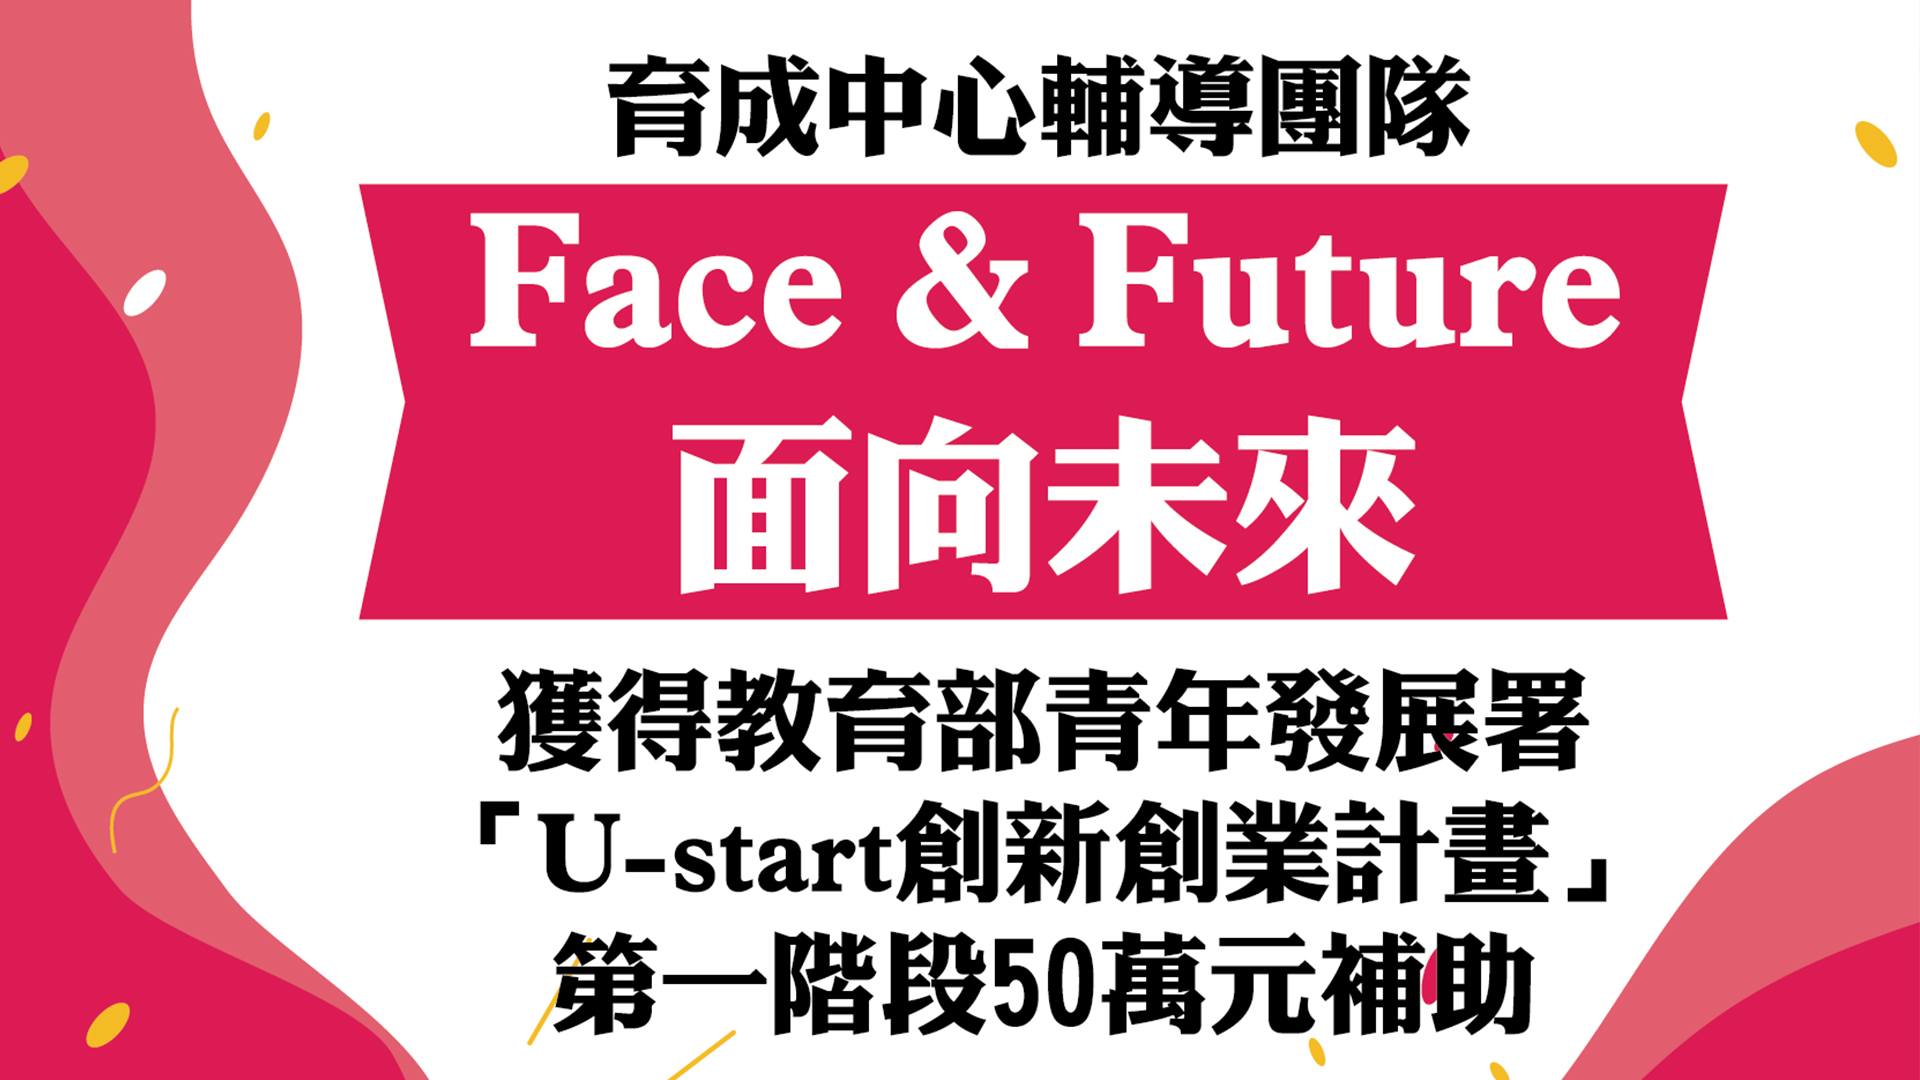 U-Start Face & Future(另開新視窗)